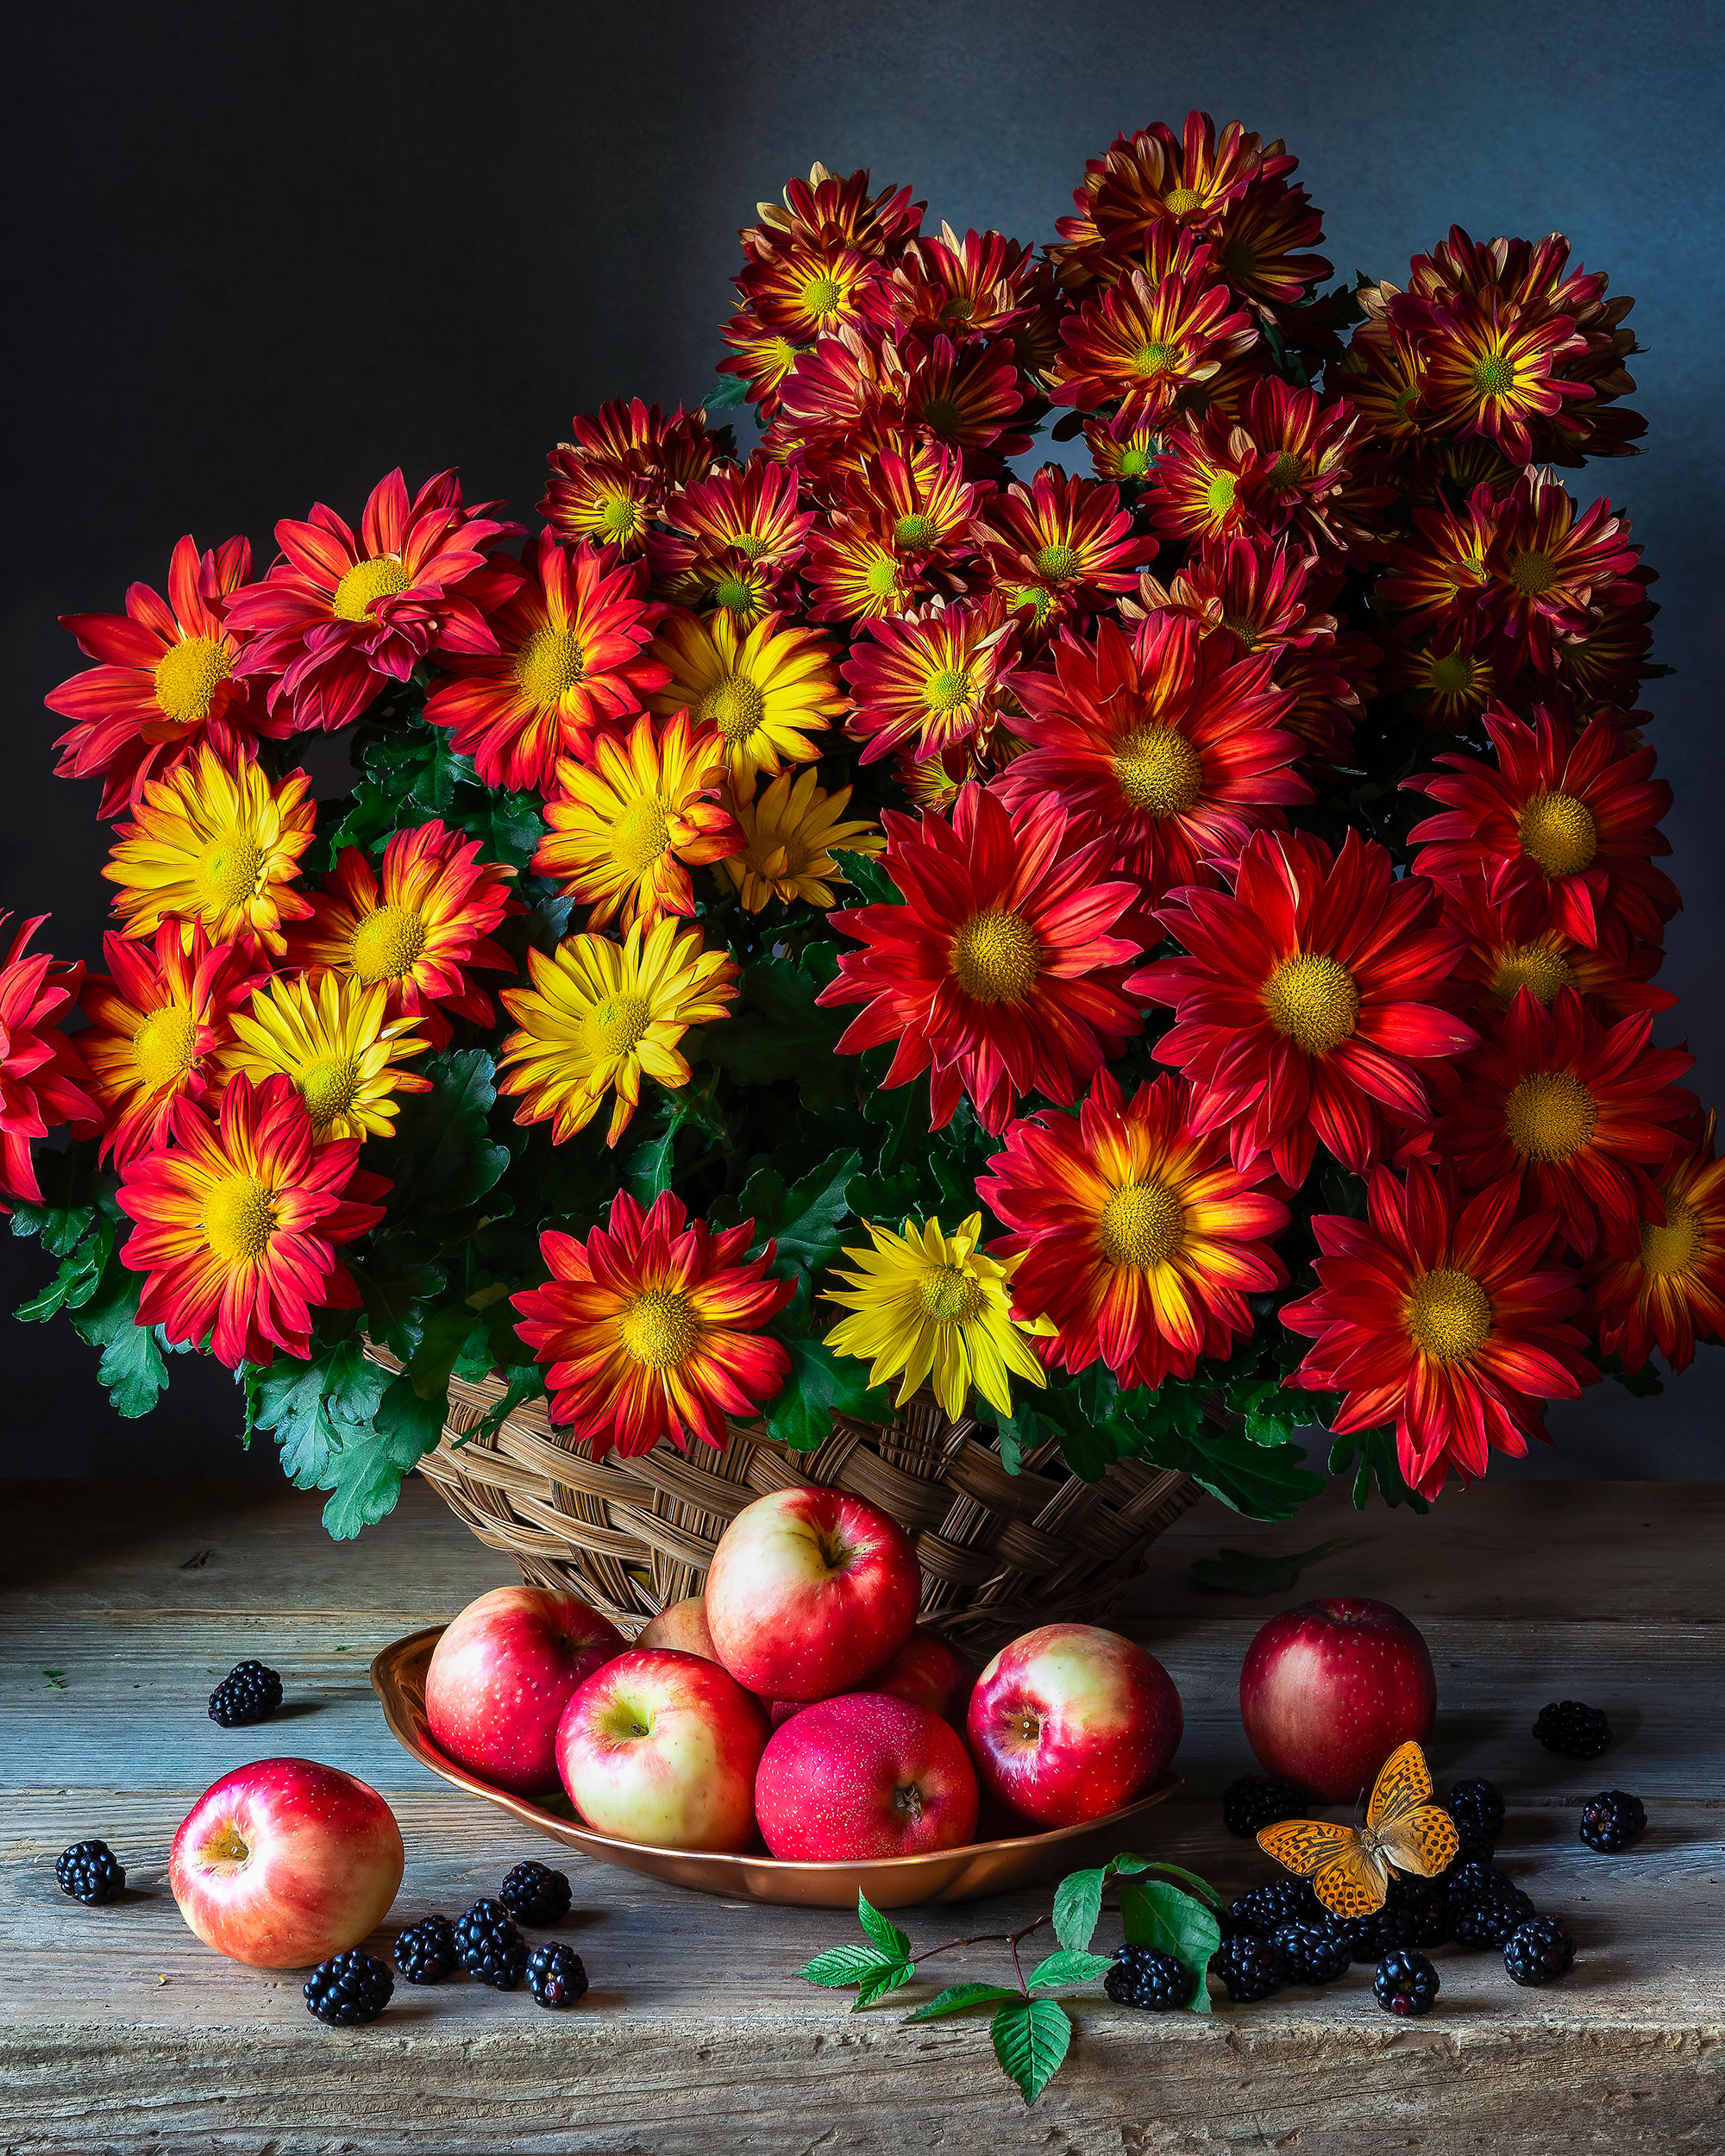 chrysanthemum, apples, mums, stil life, autumn, vibrant, autumn flowers, harvest, Слуцкая Яна